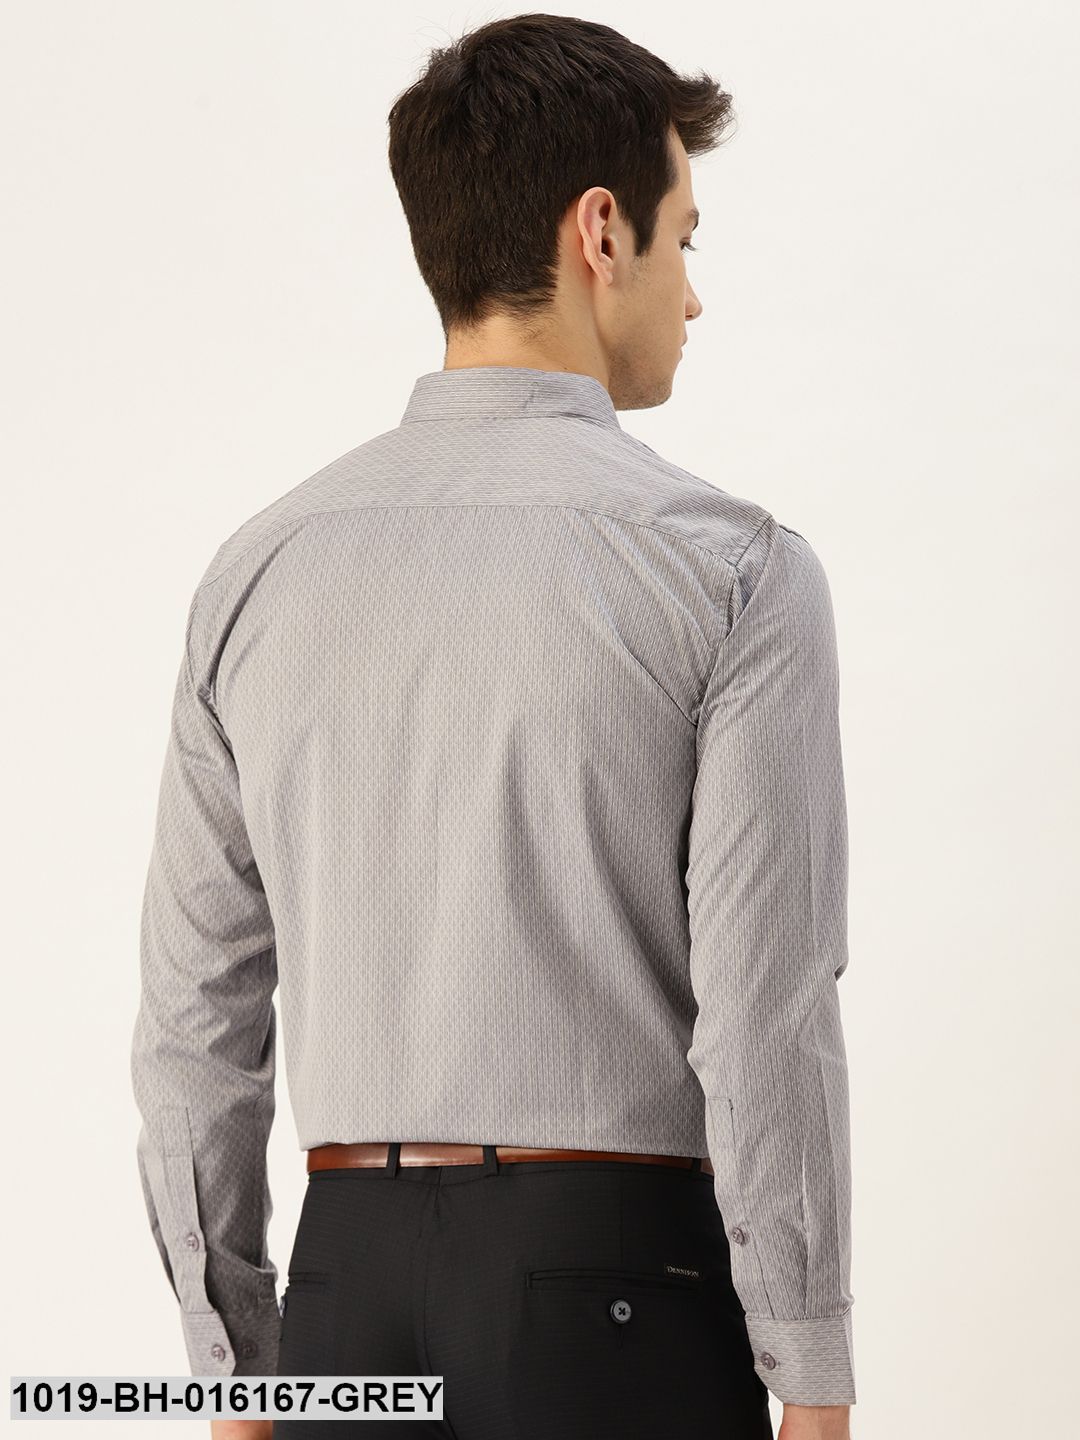 Men's Cotton Grey & Off White Striped Formal Shirt - Sojanya